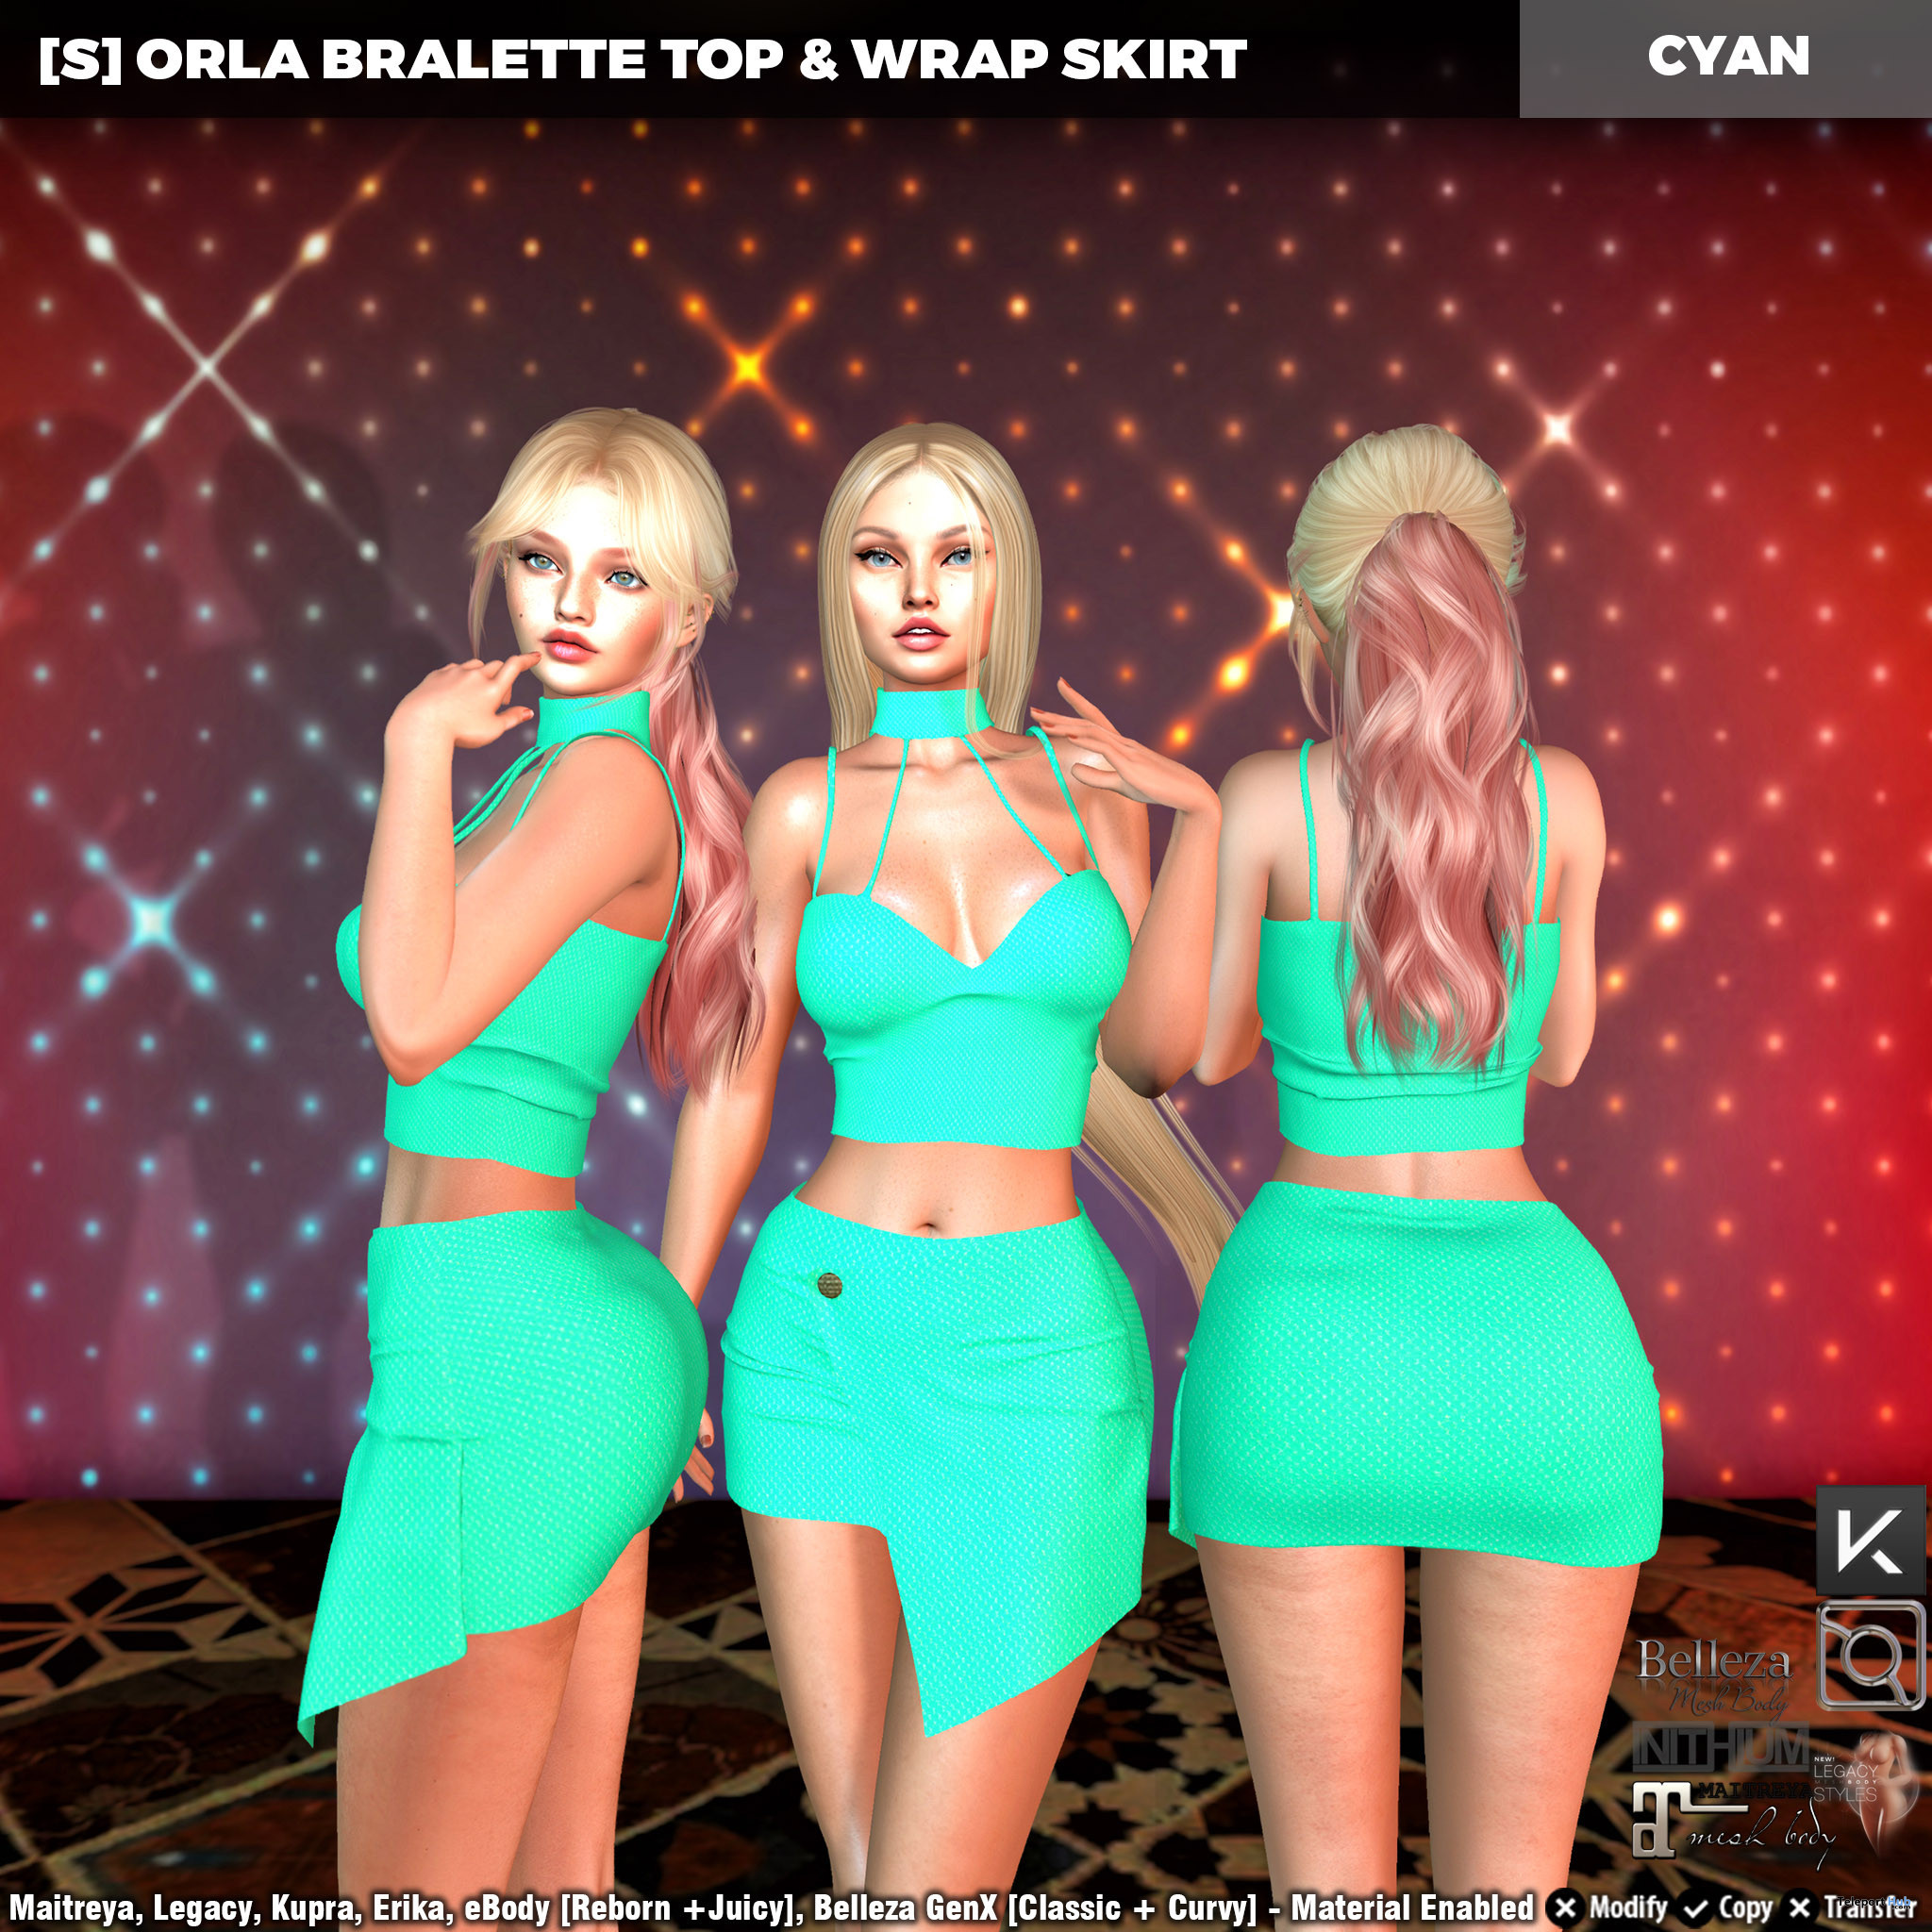 New Release: [S] Orla Bralette Top & Wrap Skirt by [satus Inc] - Teleport Hub - teleporthub.com